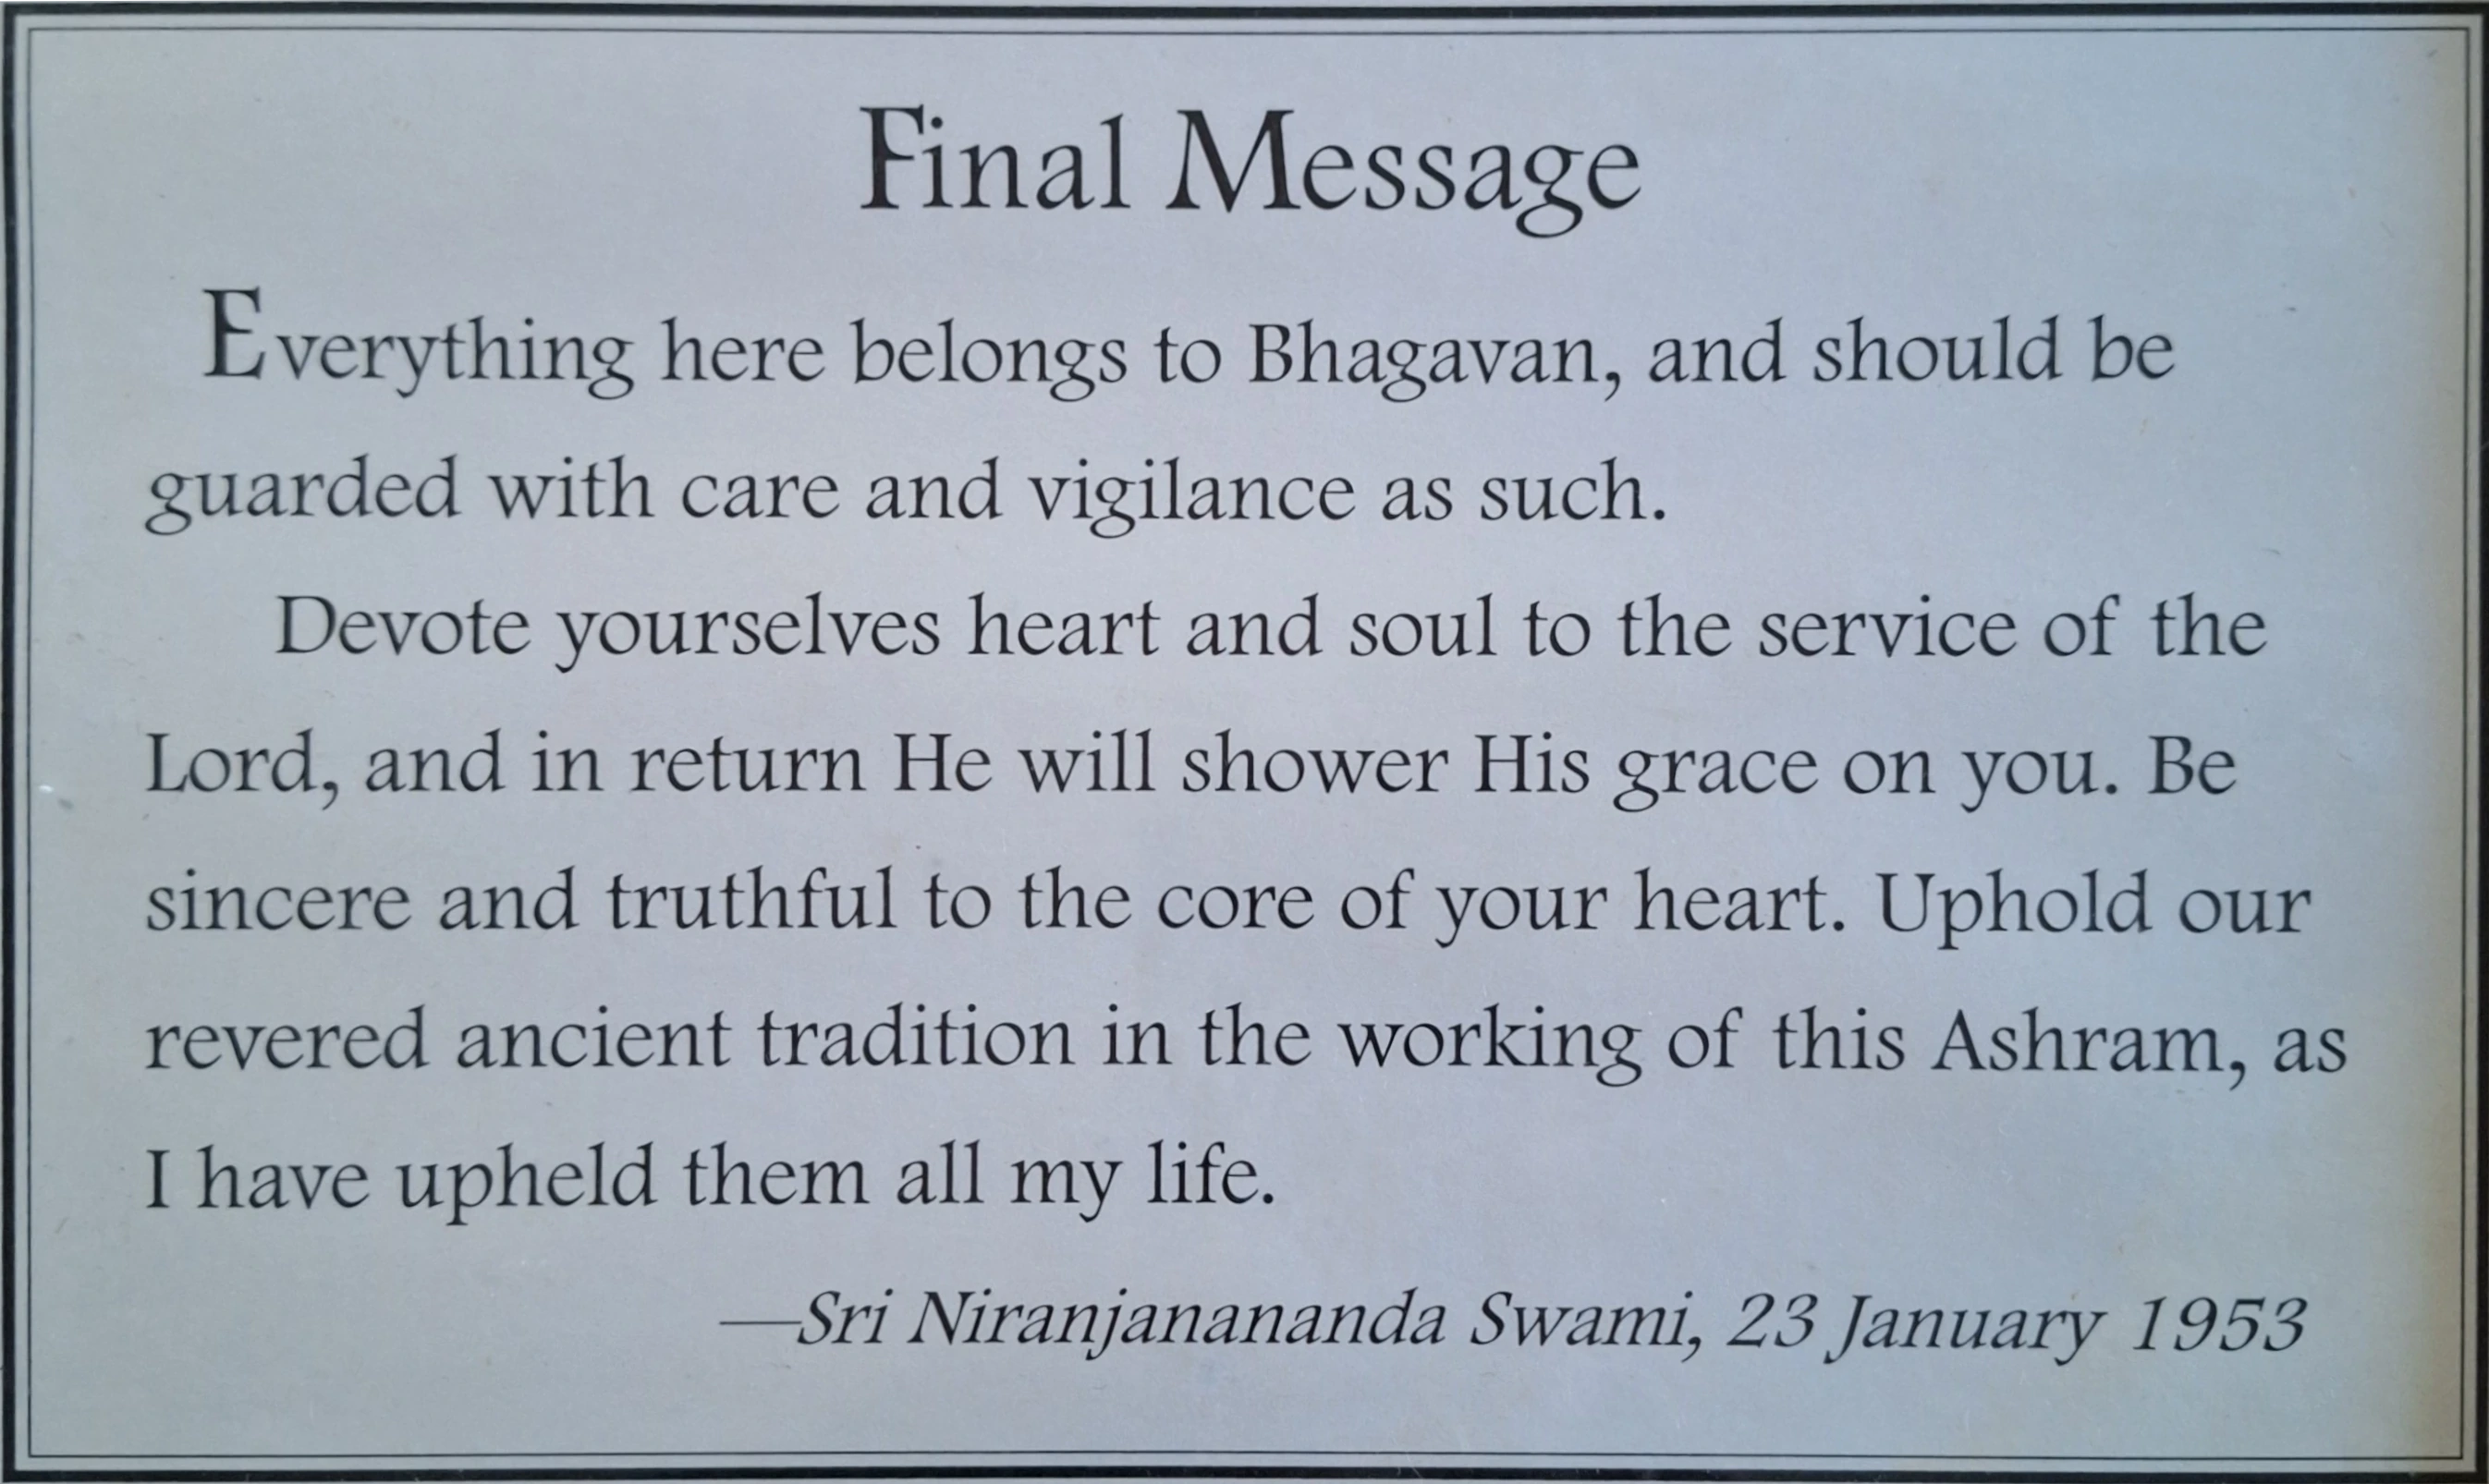 Sw.Niranjanananda's final message